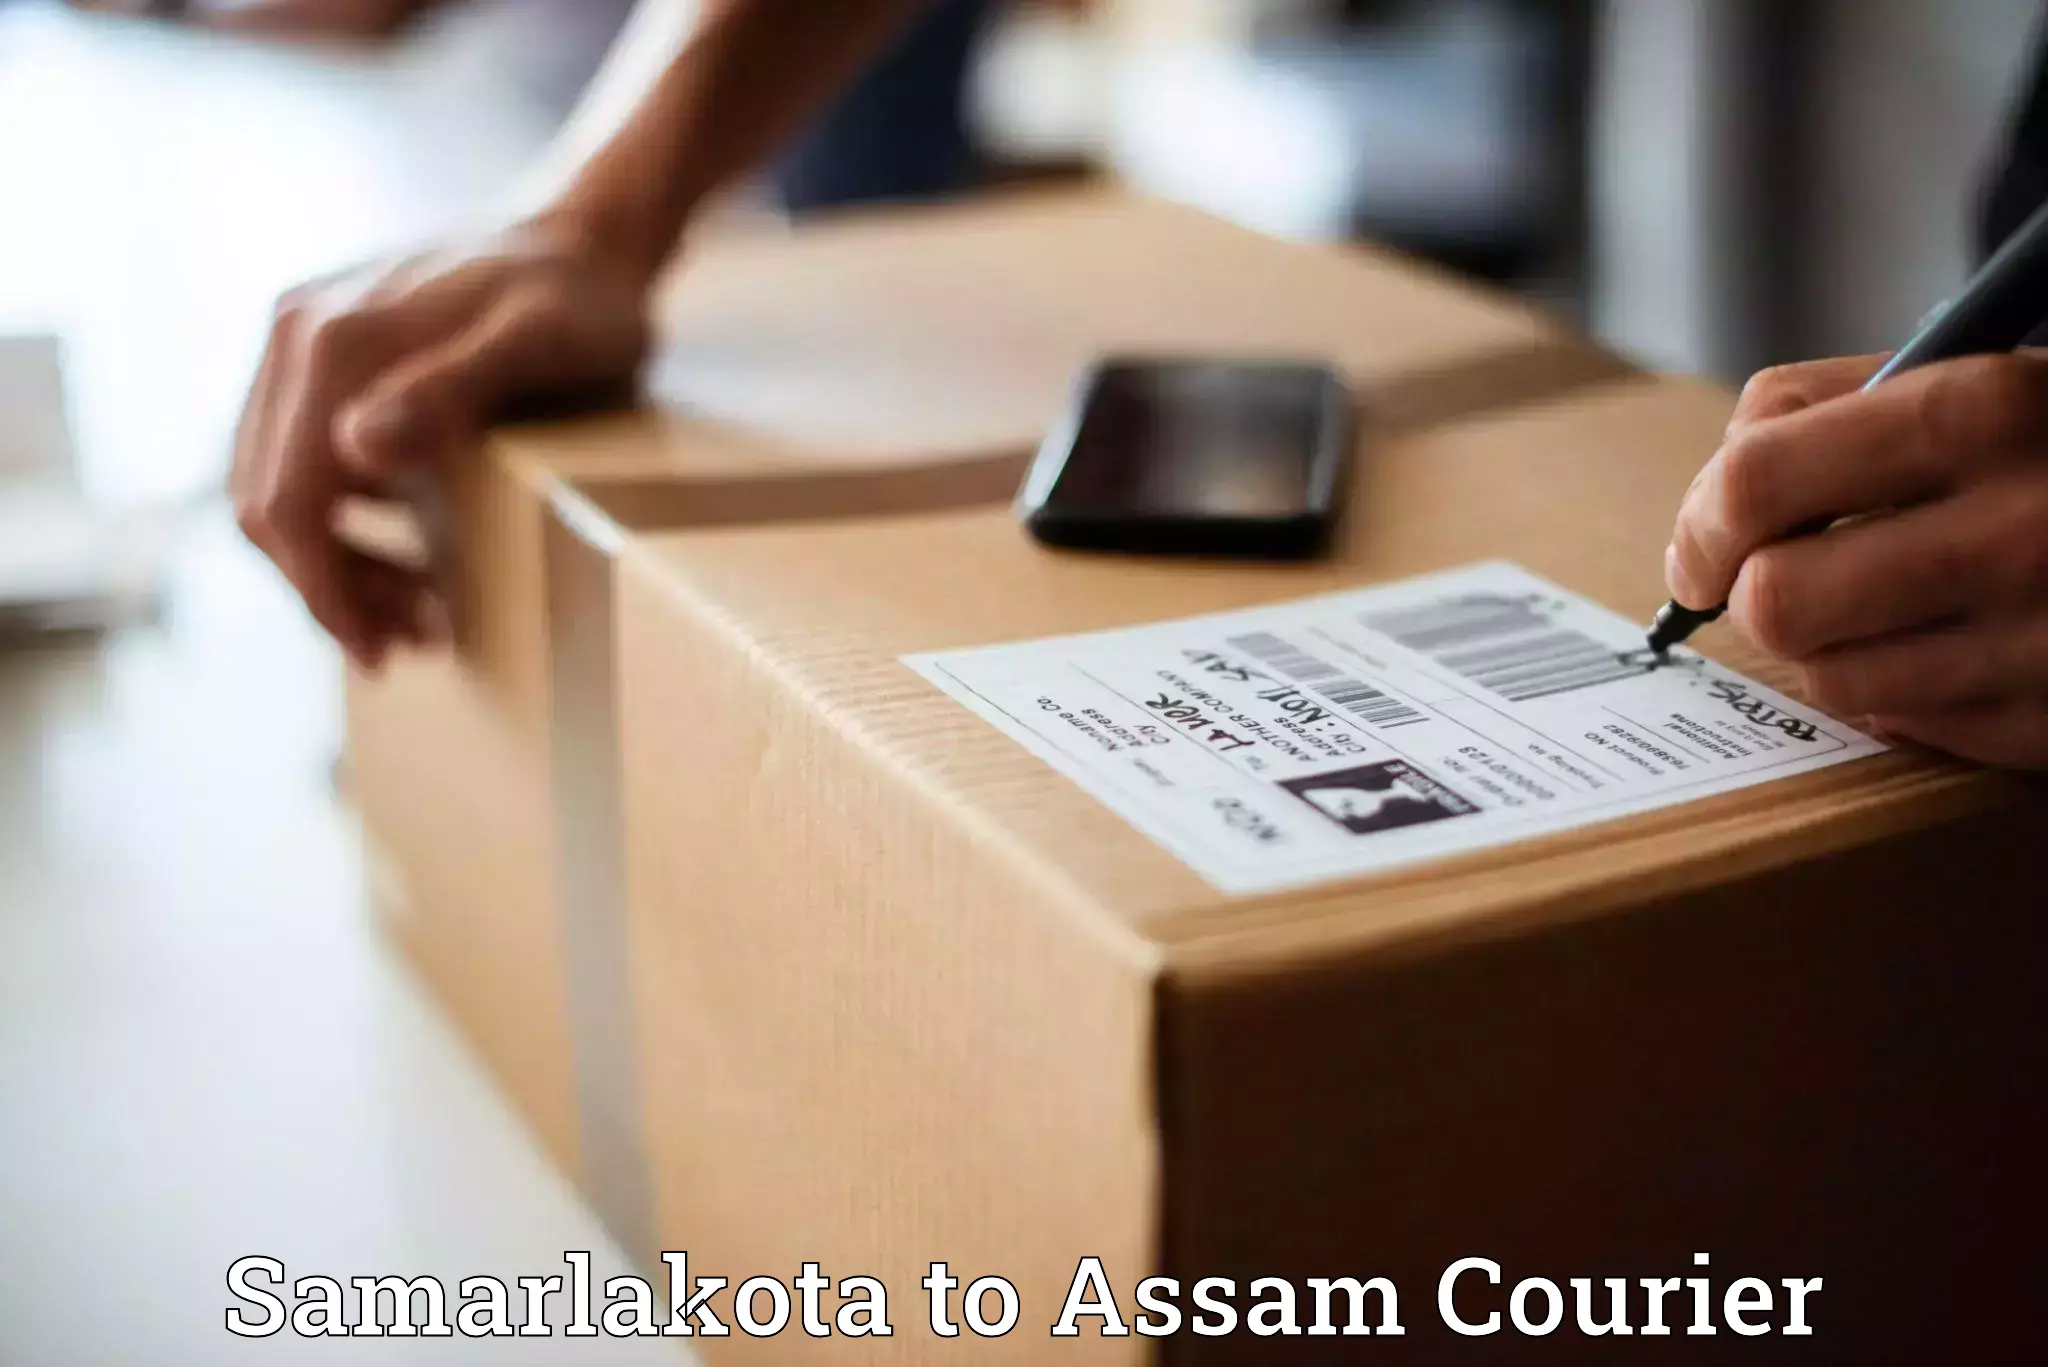 Courier service partnerships Samarlakota to Assam